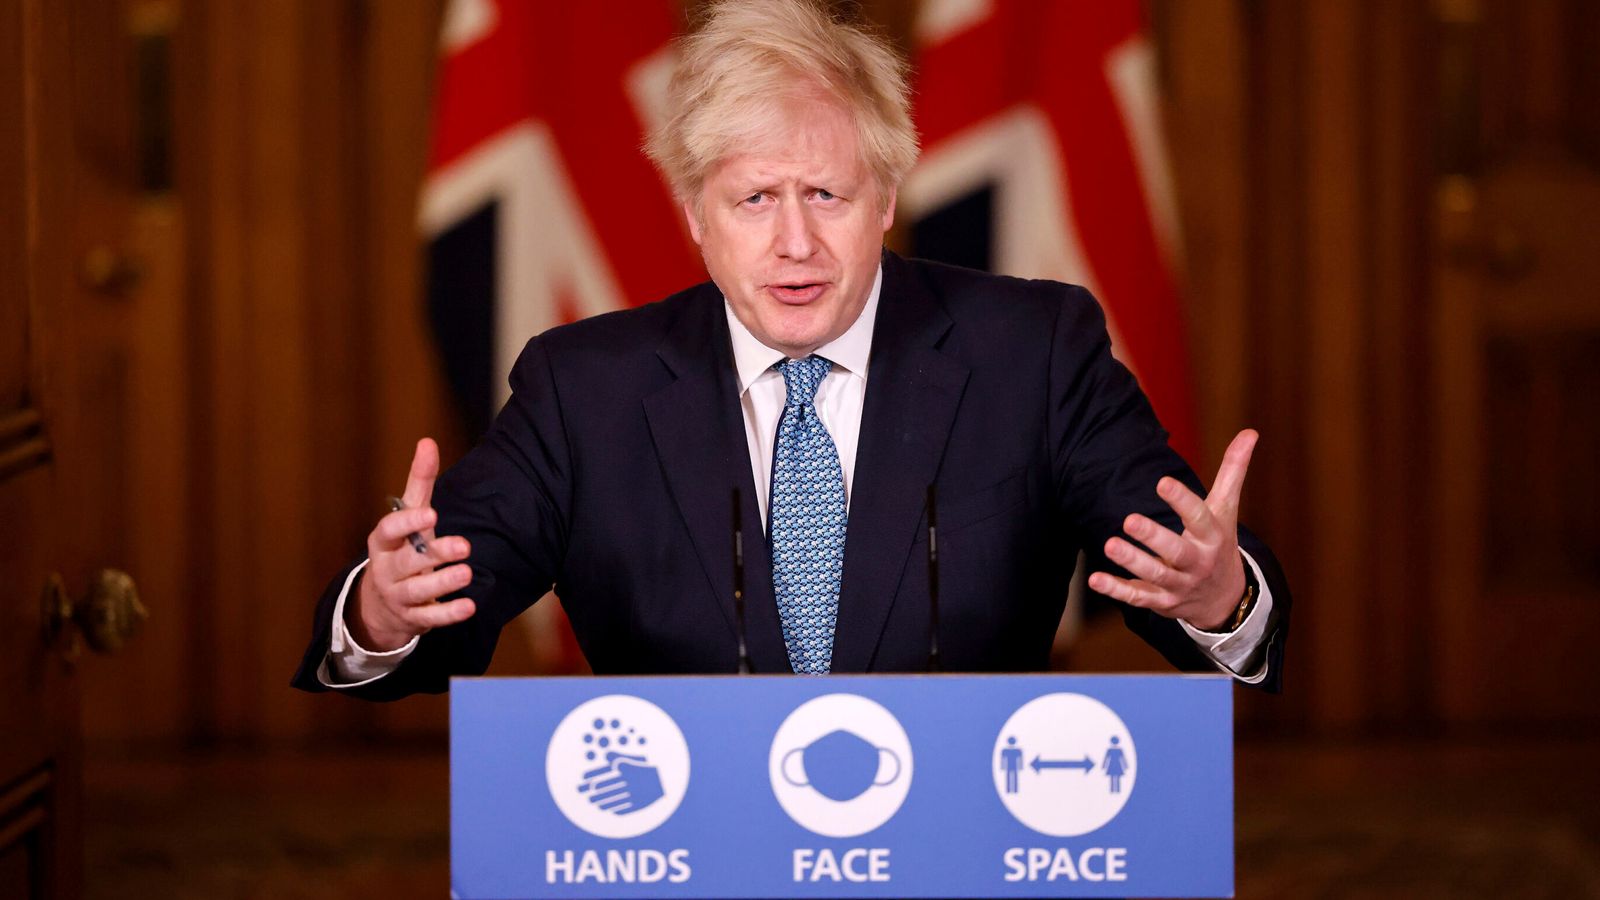 COVID Inquiry: Head of civil service said Boris Johnson 'can't lead' and made it 'impossible' to govern